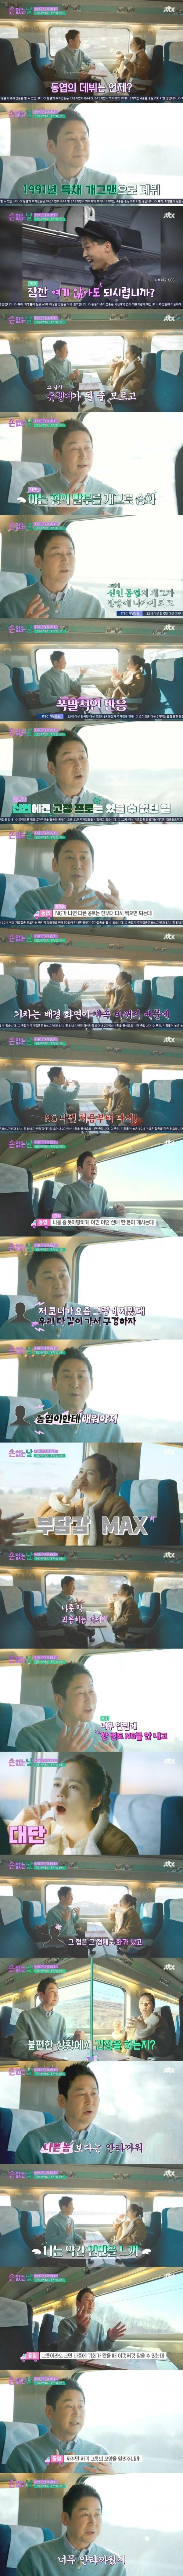 Shin Dong-yeop's attitude toward the seniors he bullied